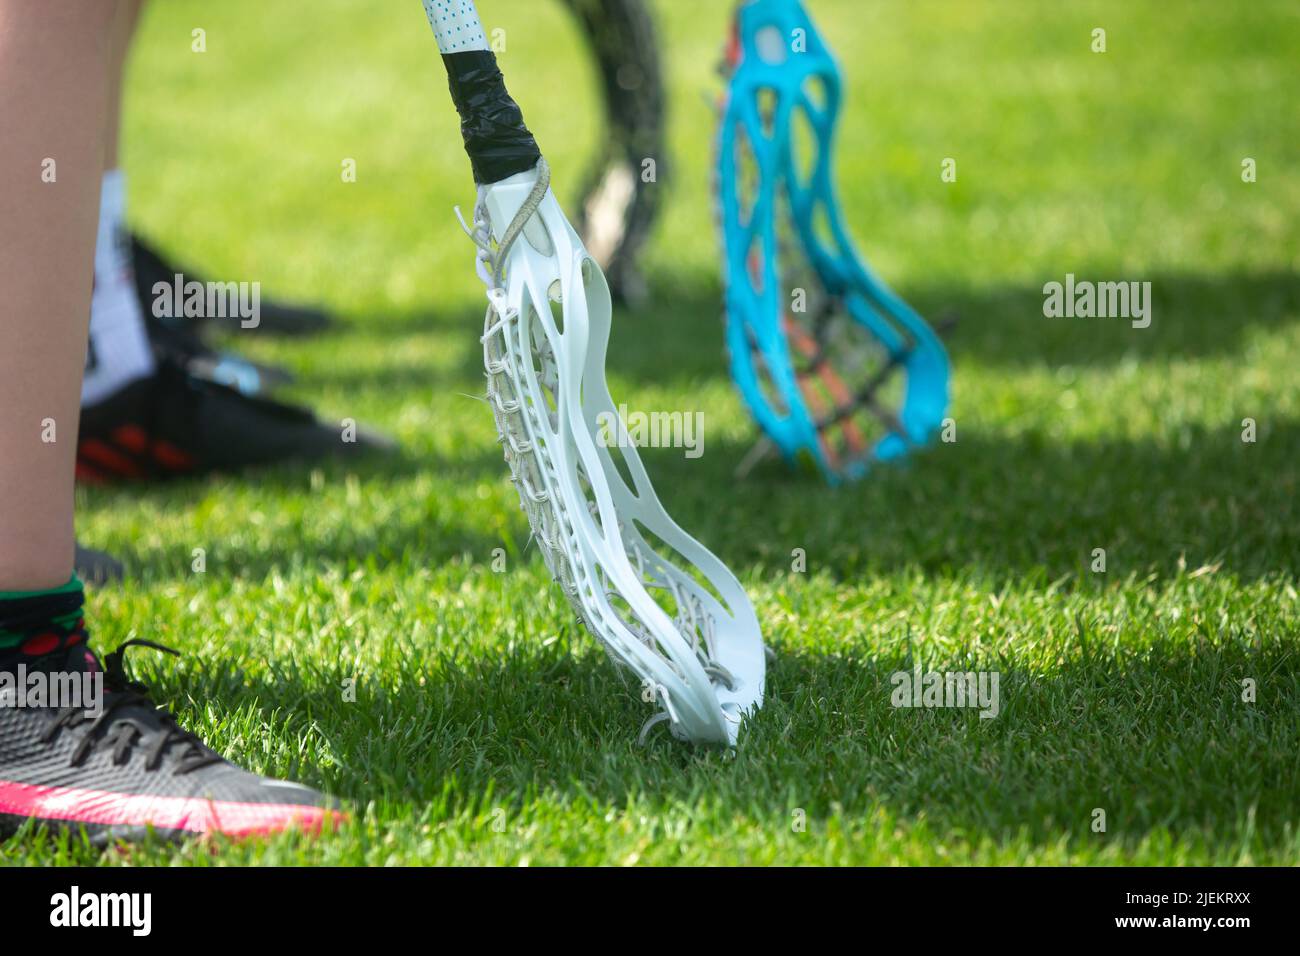 Lacrosse Themed Photo, American Sports Stock Photo